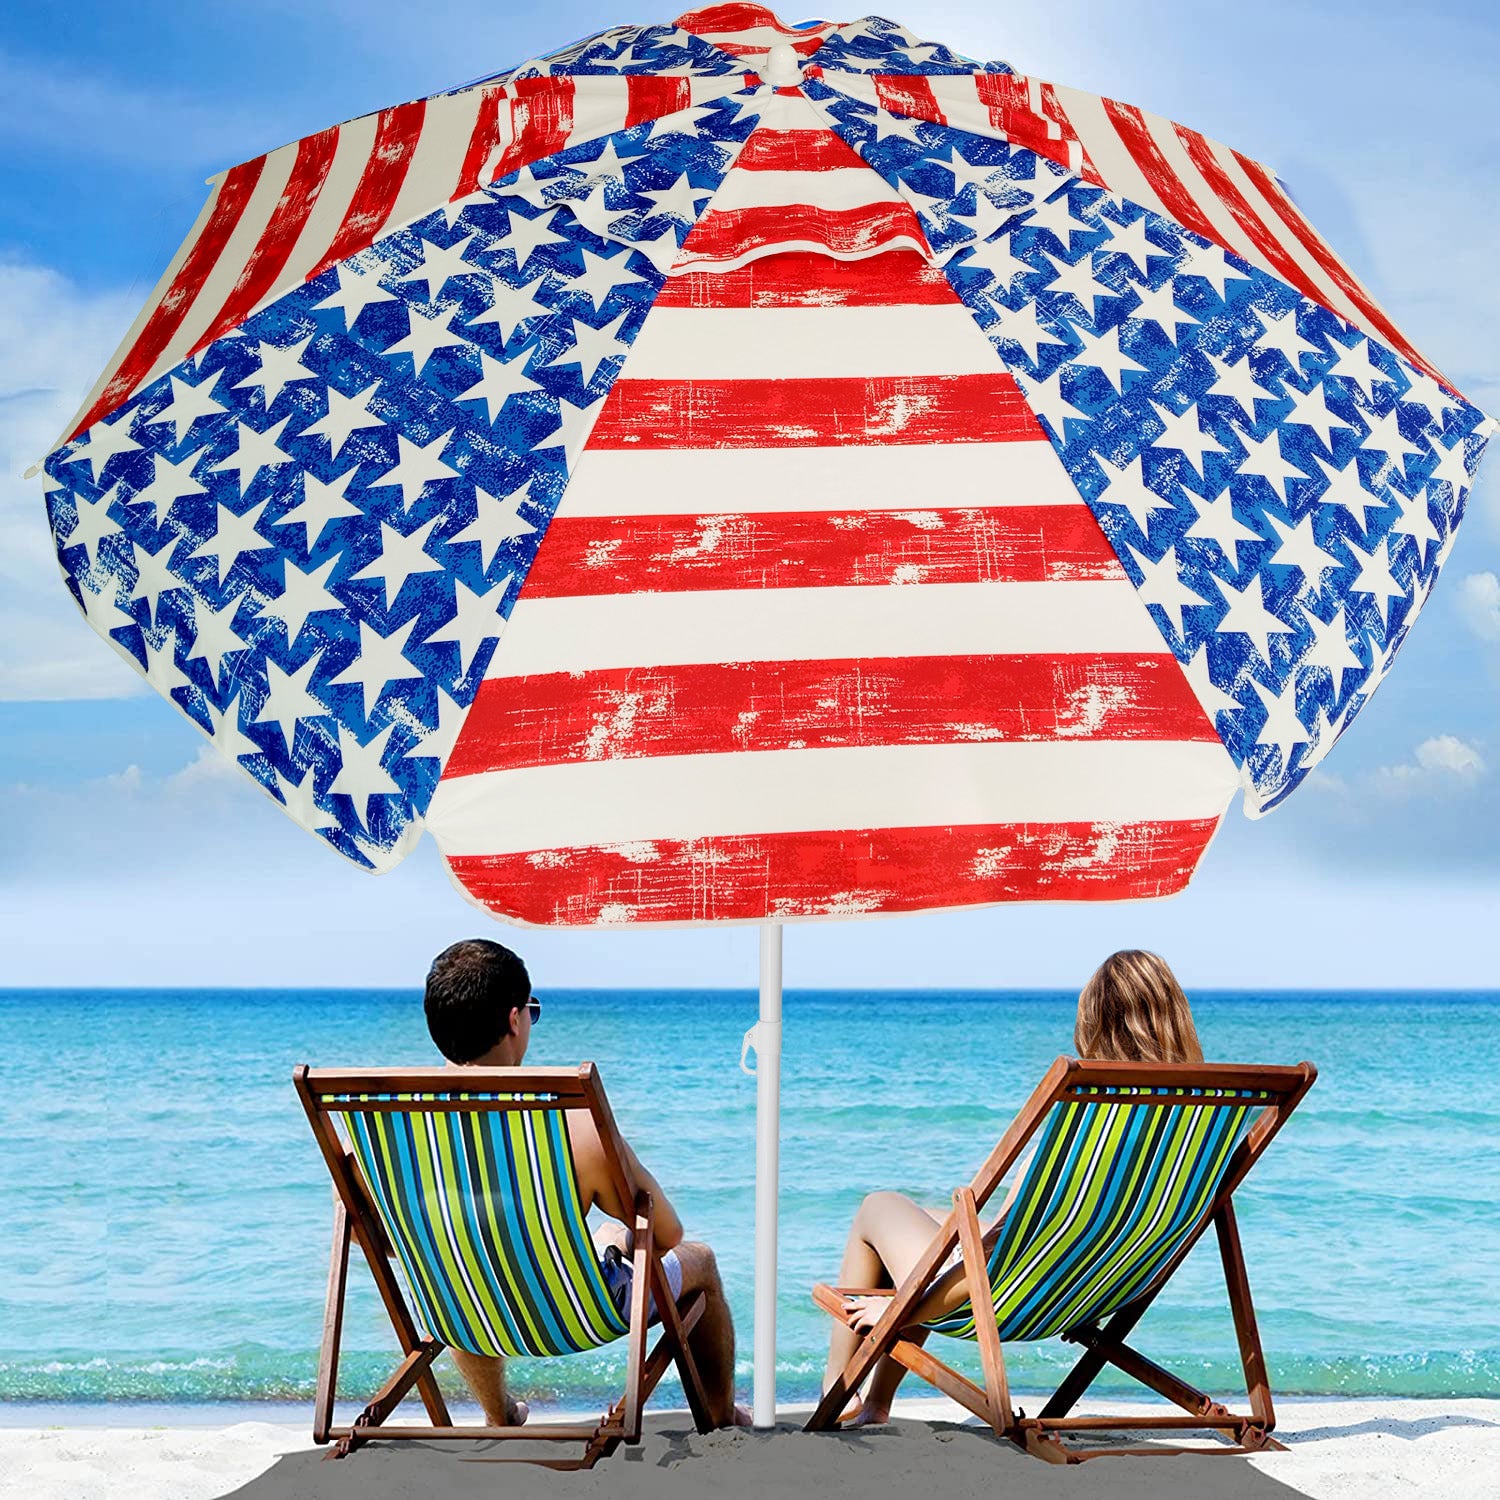 Portable Beach Umbrella: Your Essential Beach Companion